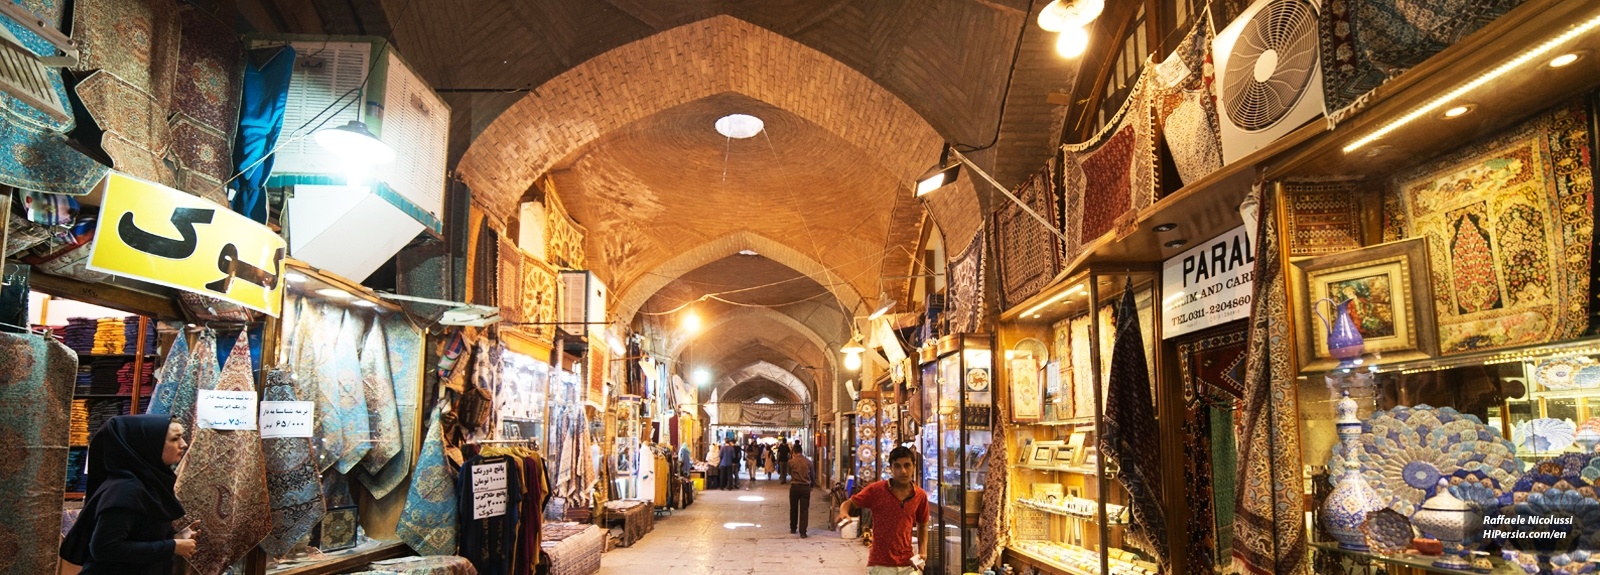 بازار بزرگ اصفهان - Grand Bazaar Of Isfahan